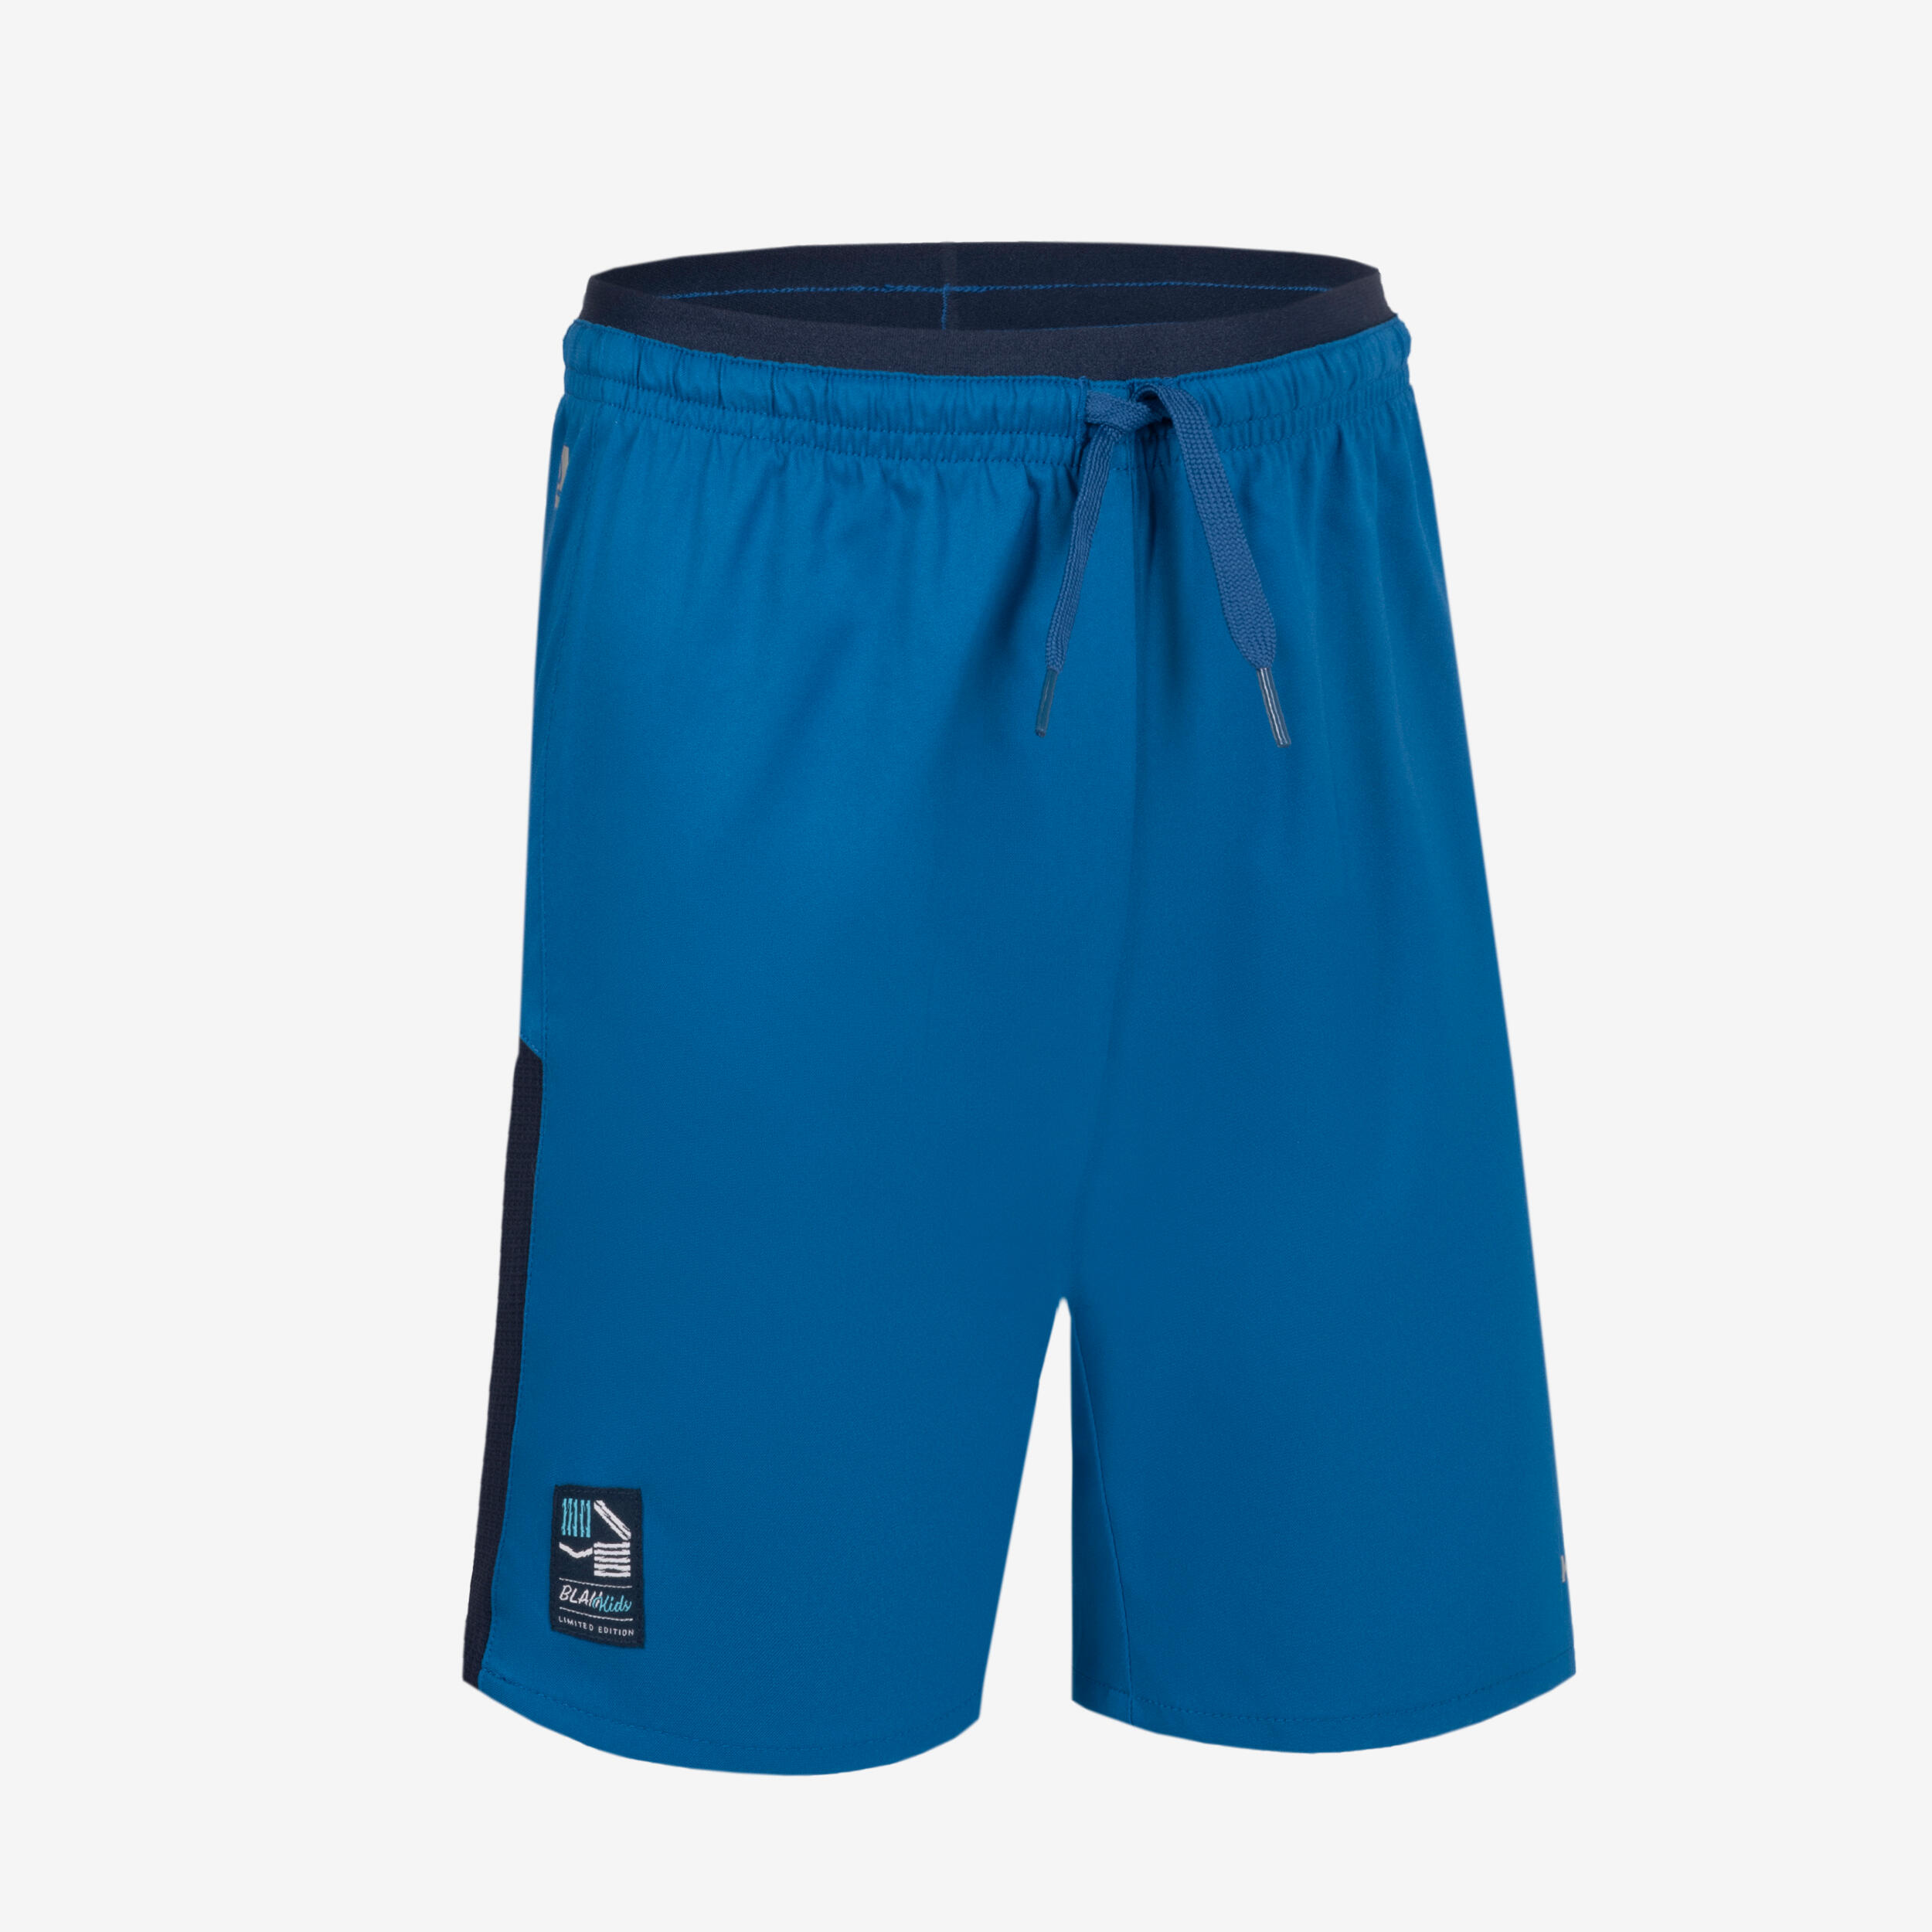 KIPSTA Kids' Football Shorts - Blue/Navy